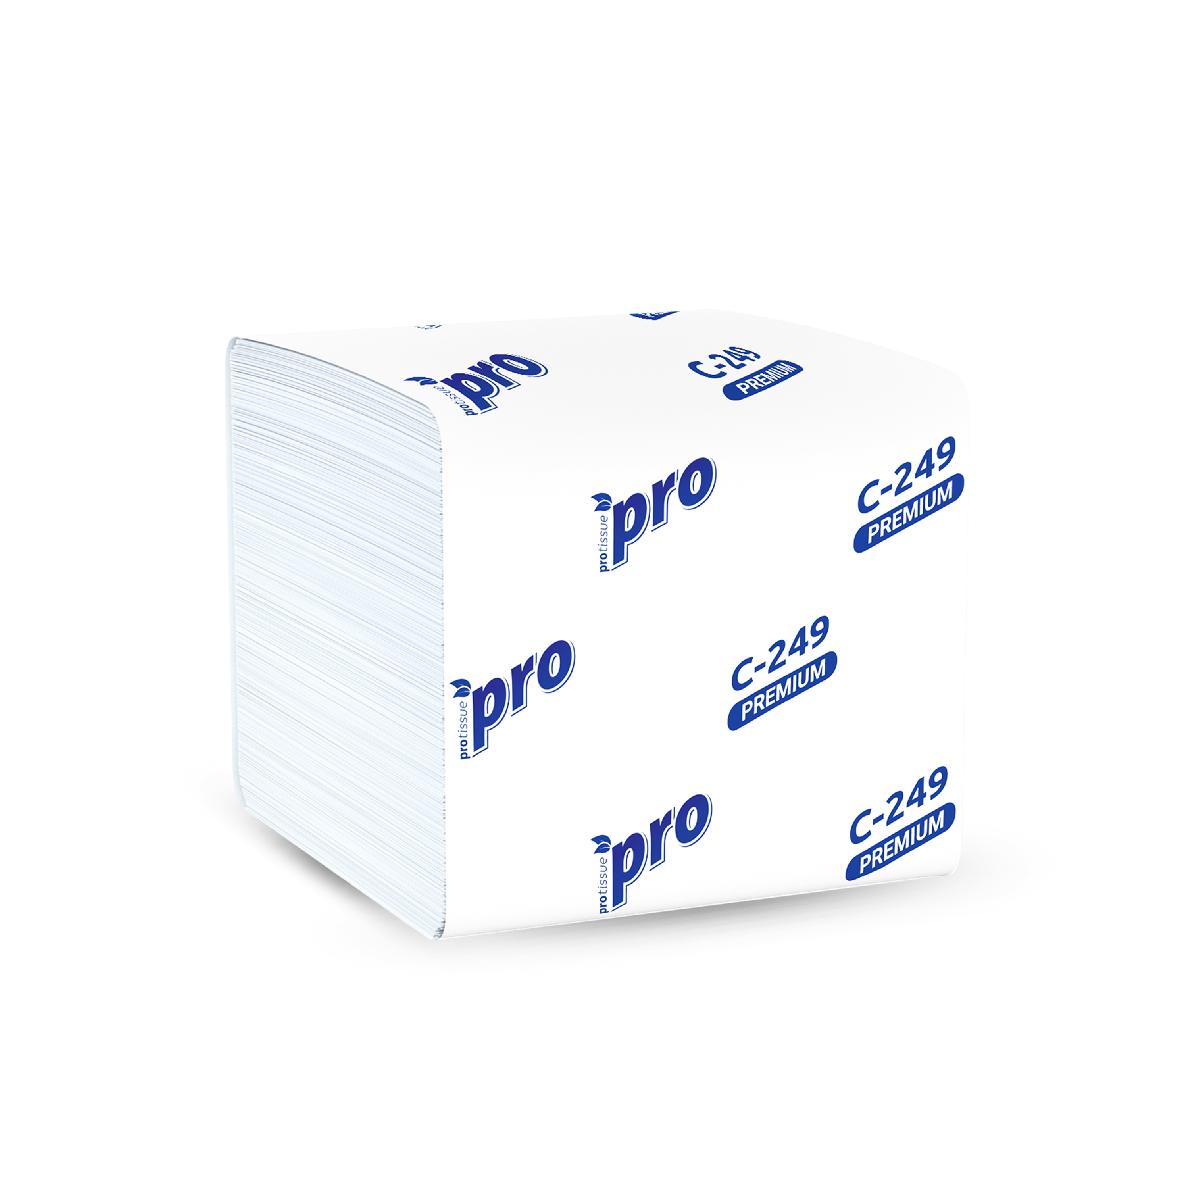 Туалетная бумага в листах 2-сл 250л 11*21 16гр Protissue Т3 целлюлоза С249 (40)